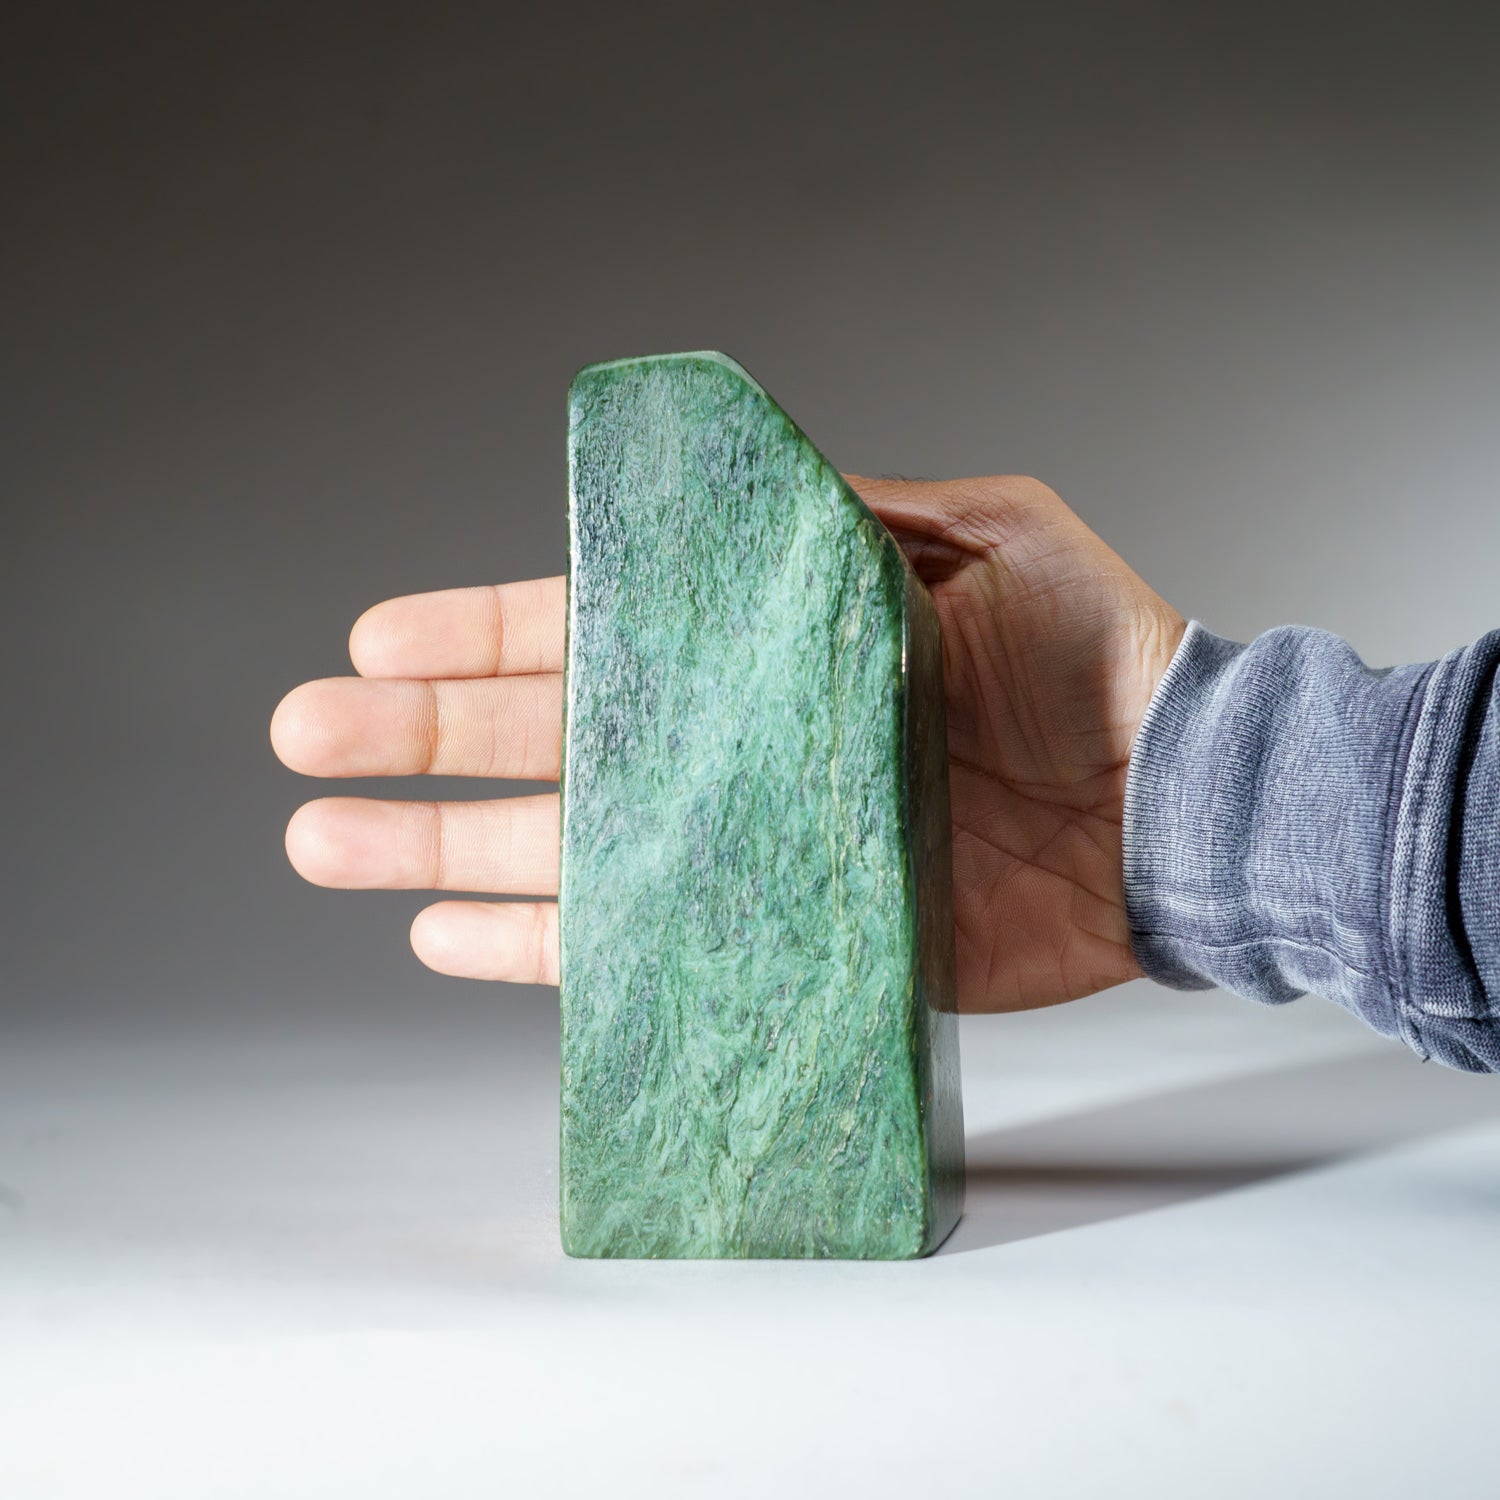 Polished Nephrite Jade Freeform from Pakistan (2.7 lbs)